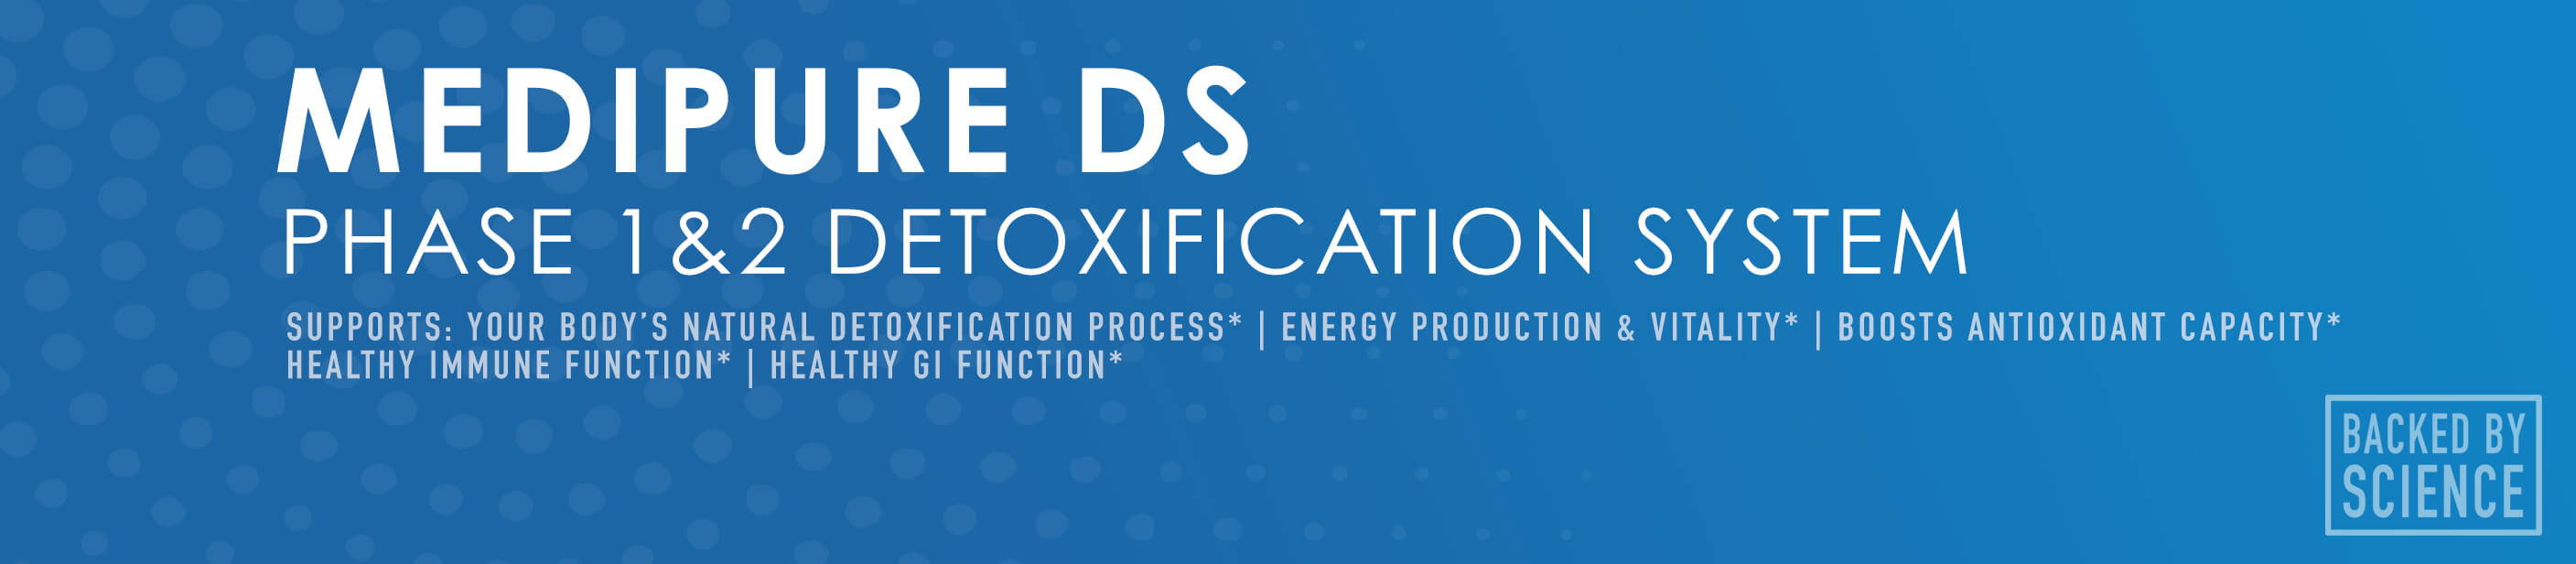 Medipure DS - Phase 1&2 Detoxification System - NuEthix